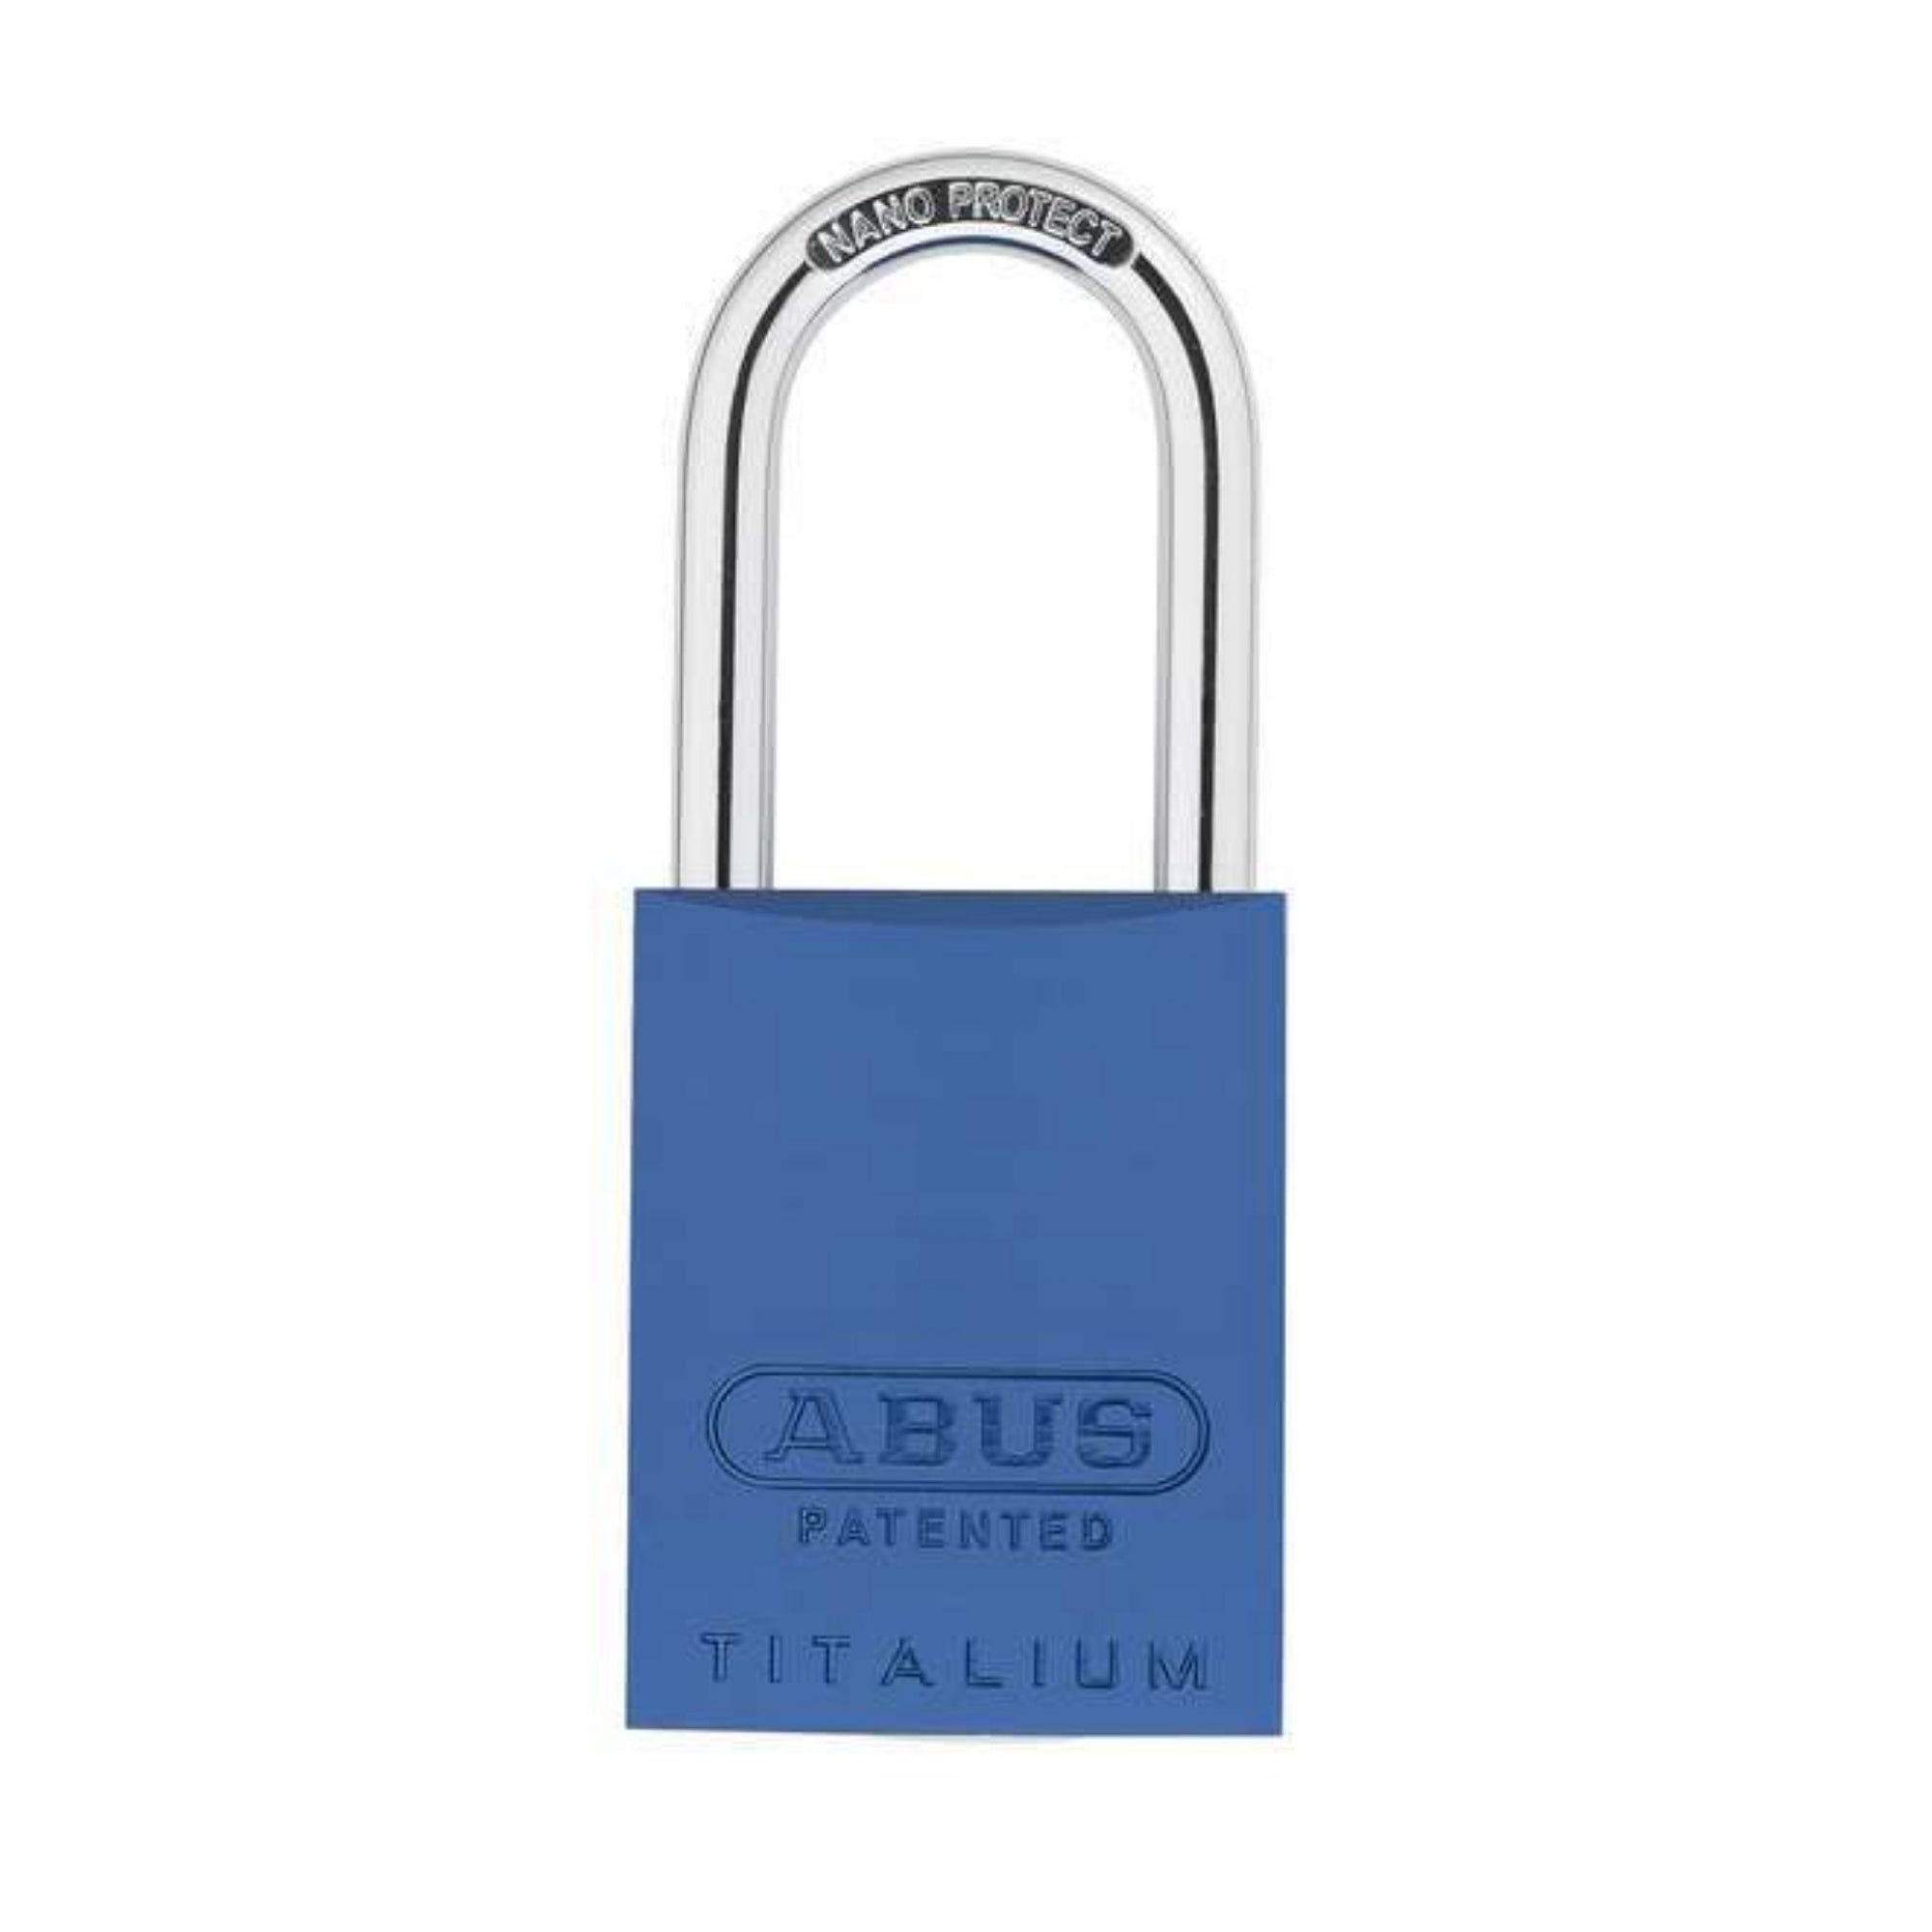 Abus 83AL/40 Series Titalium Safety Locks Blue Lockout Tagout Padlocks - The Lock Source